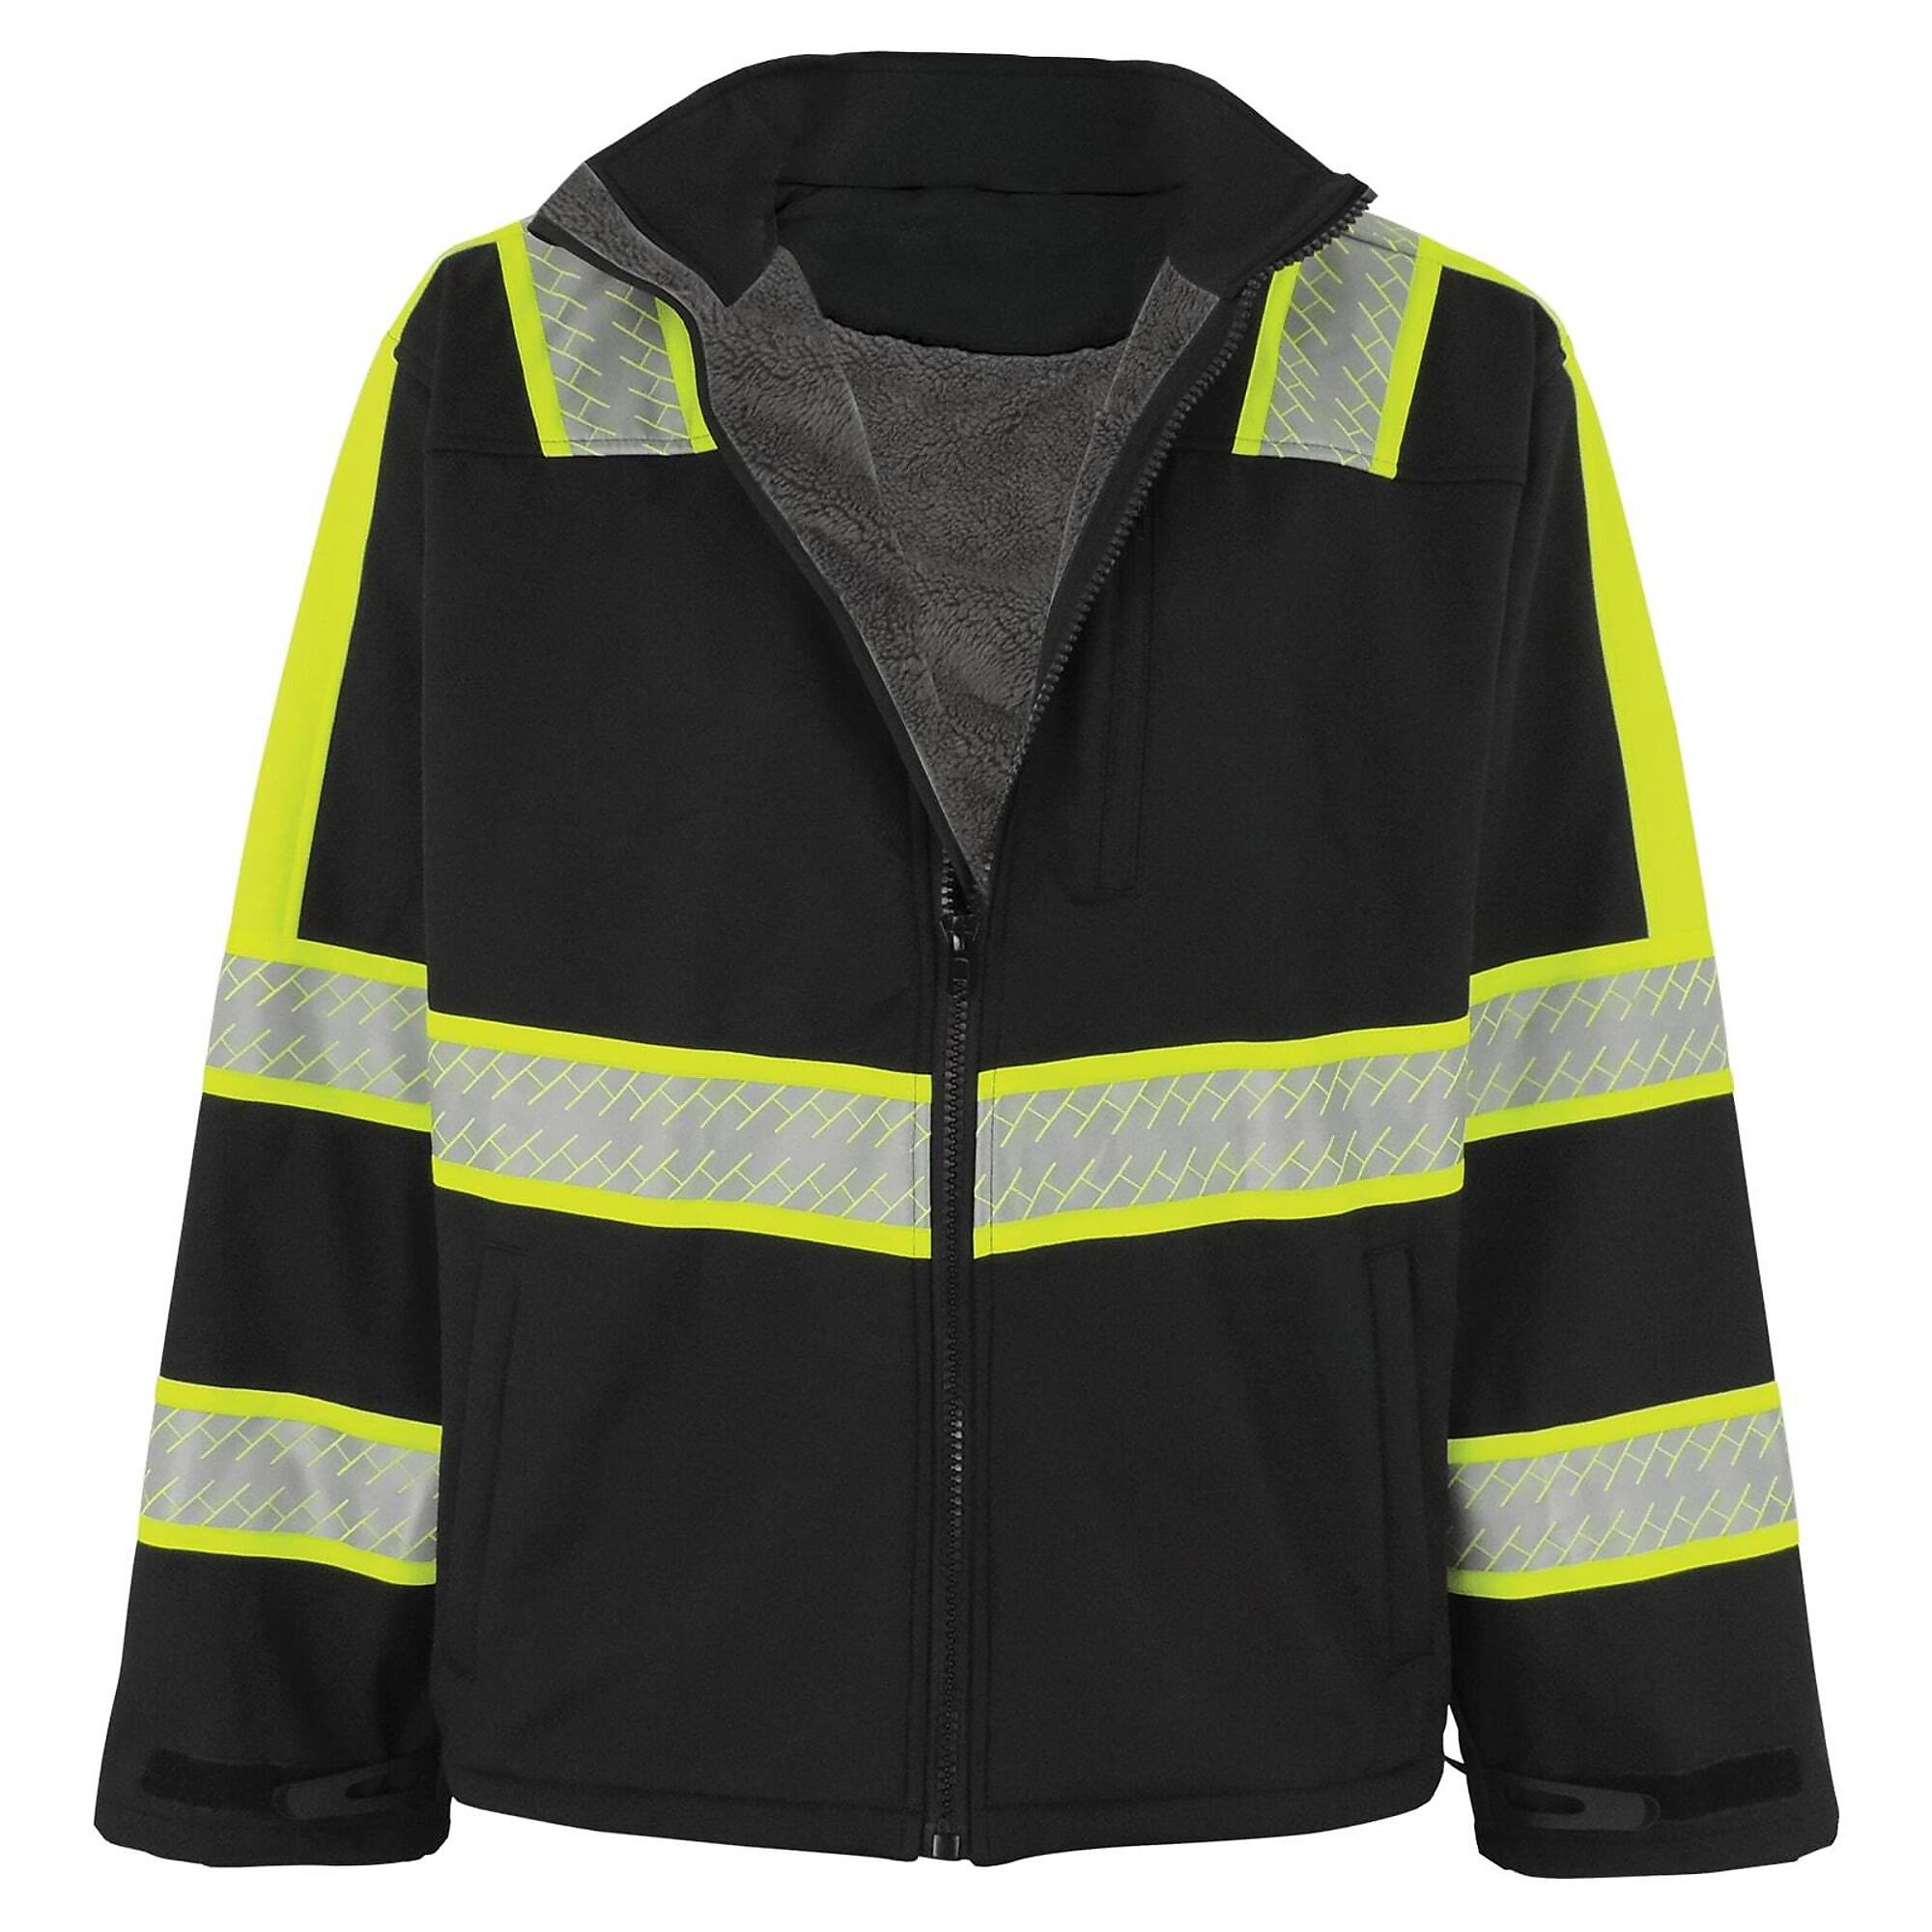 FrogWear, Prem Enhanced Visibility Black Sherpa-Lined Jacket, Size S, Color Black with Silver Reflective, Model EV-SJ1-S